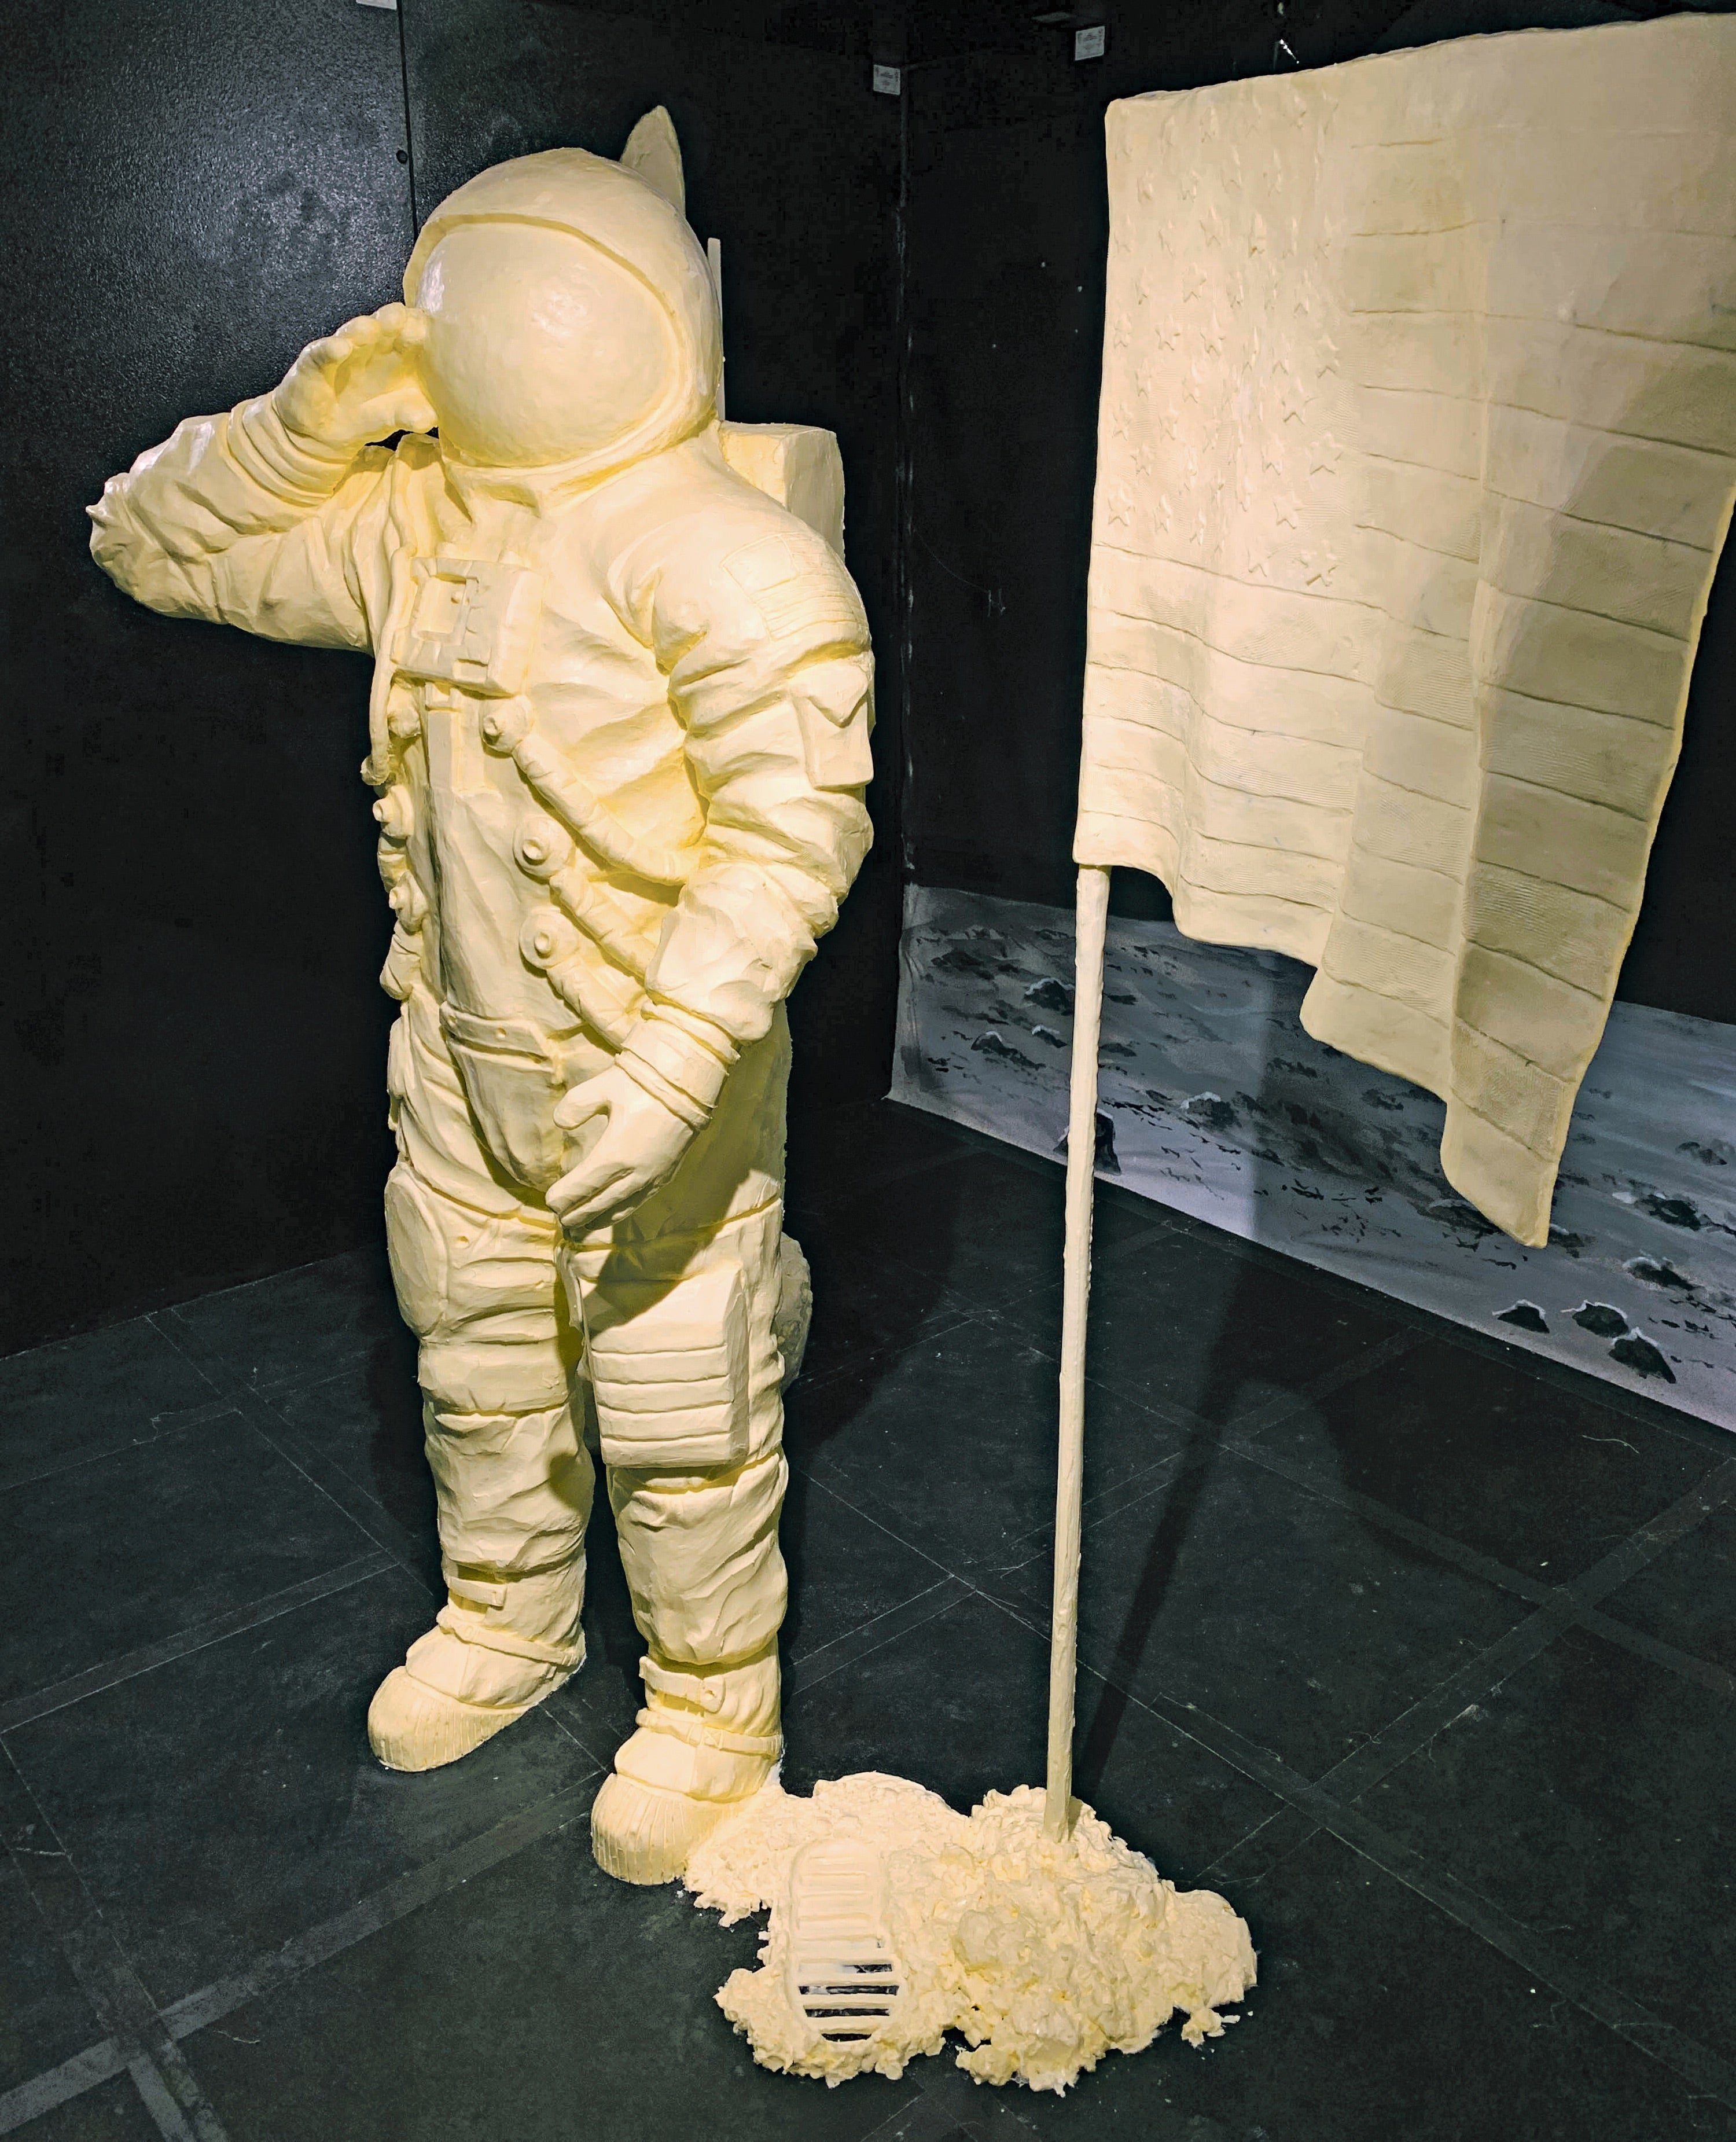 Apollo 11 astronauts receive a buttery tribute at the Ohio State